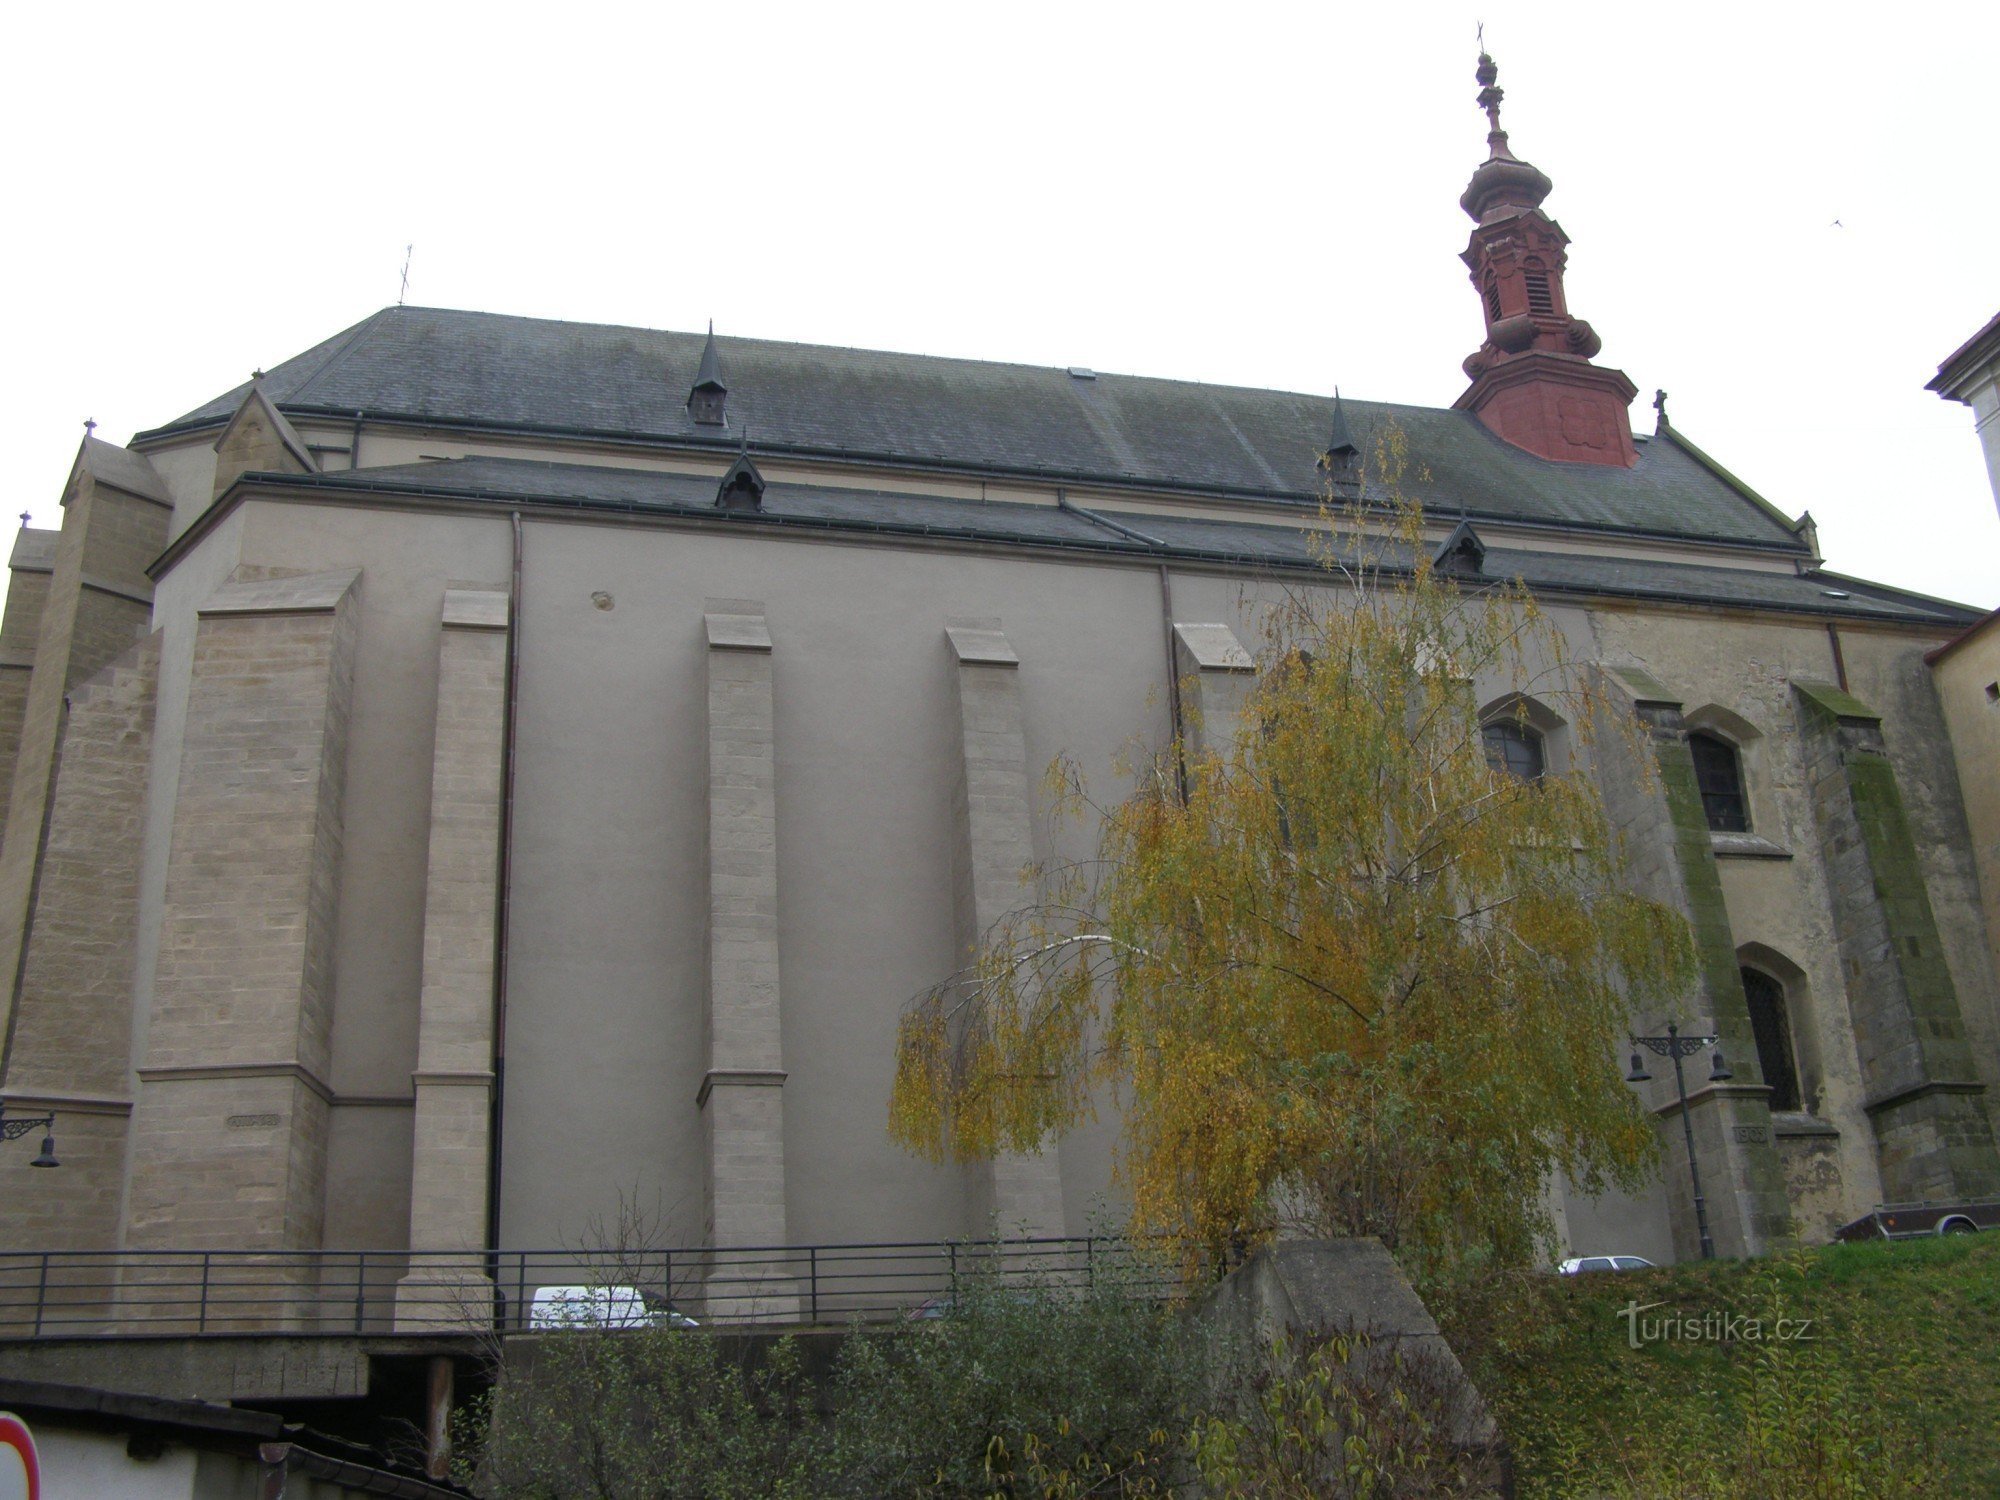 Jaroměř - nhà thờ St. Nicholas